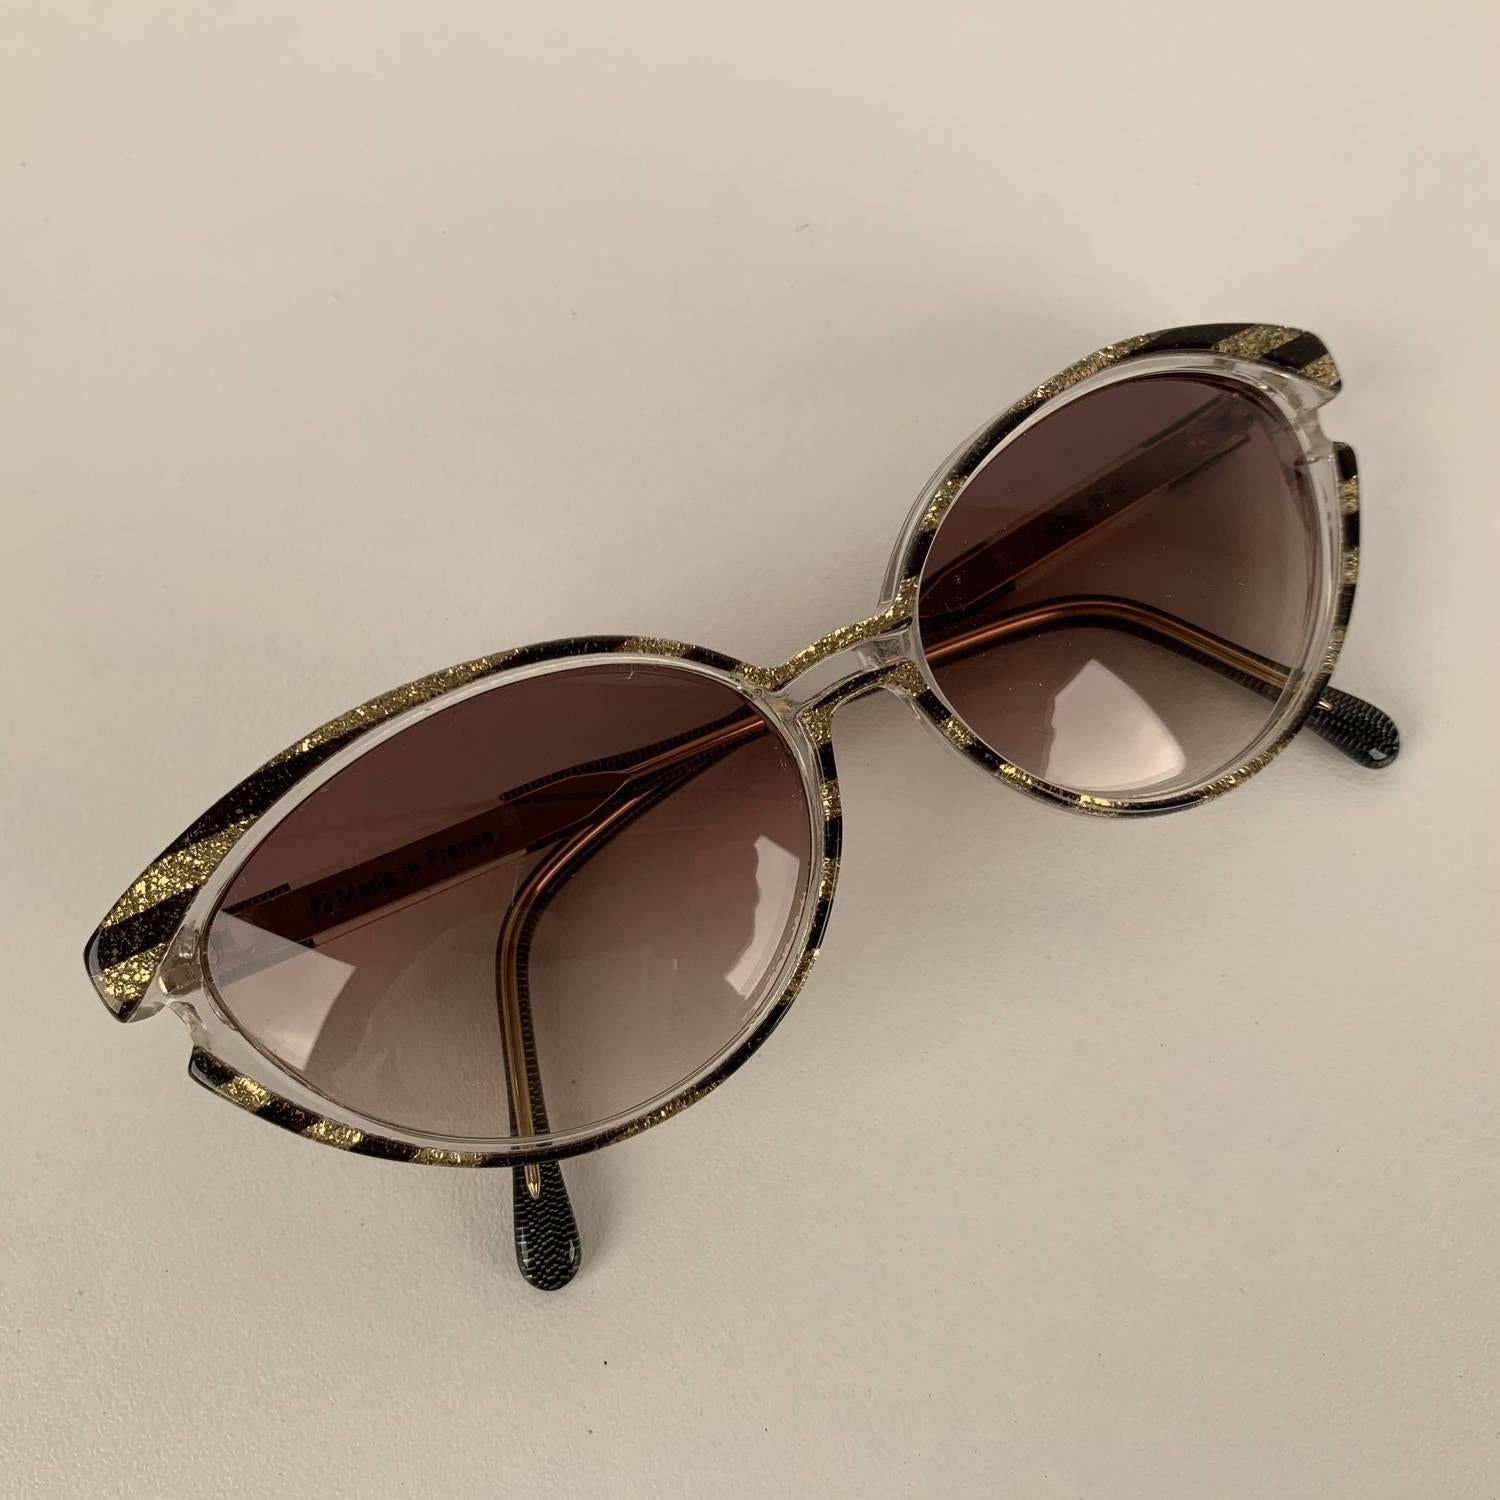 Yves Saint Laurent Vintage Sunglasses 8316 P 42 Striped Gold Glitter 2